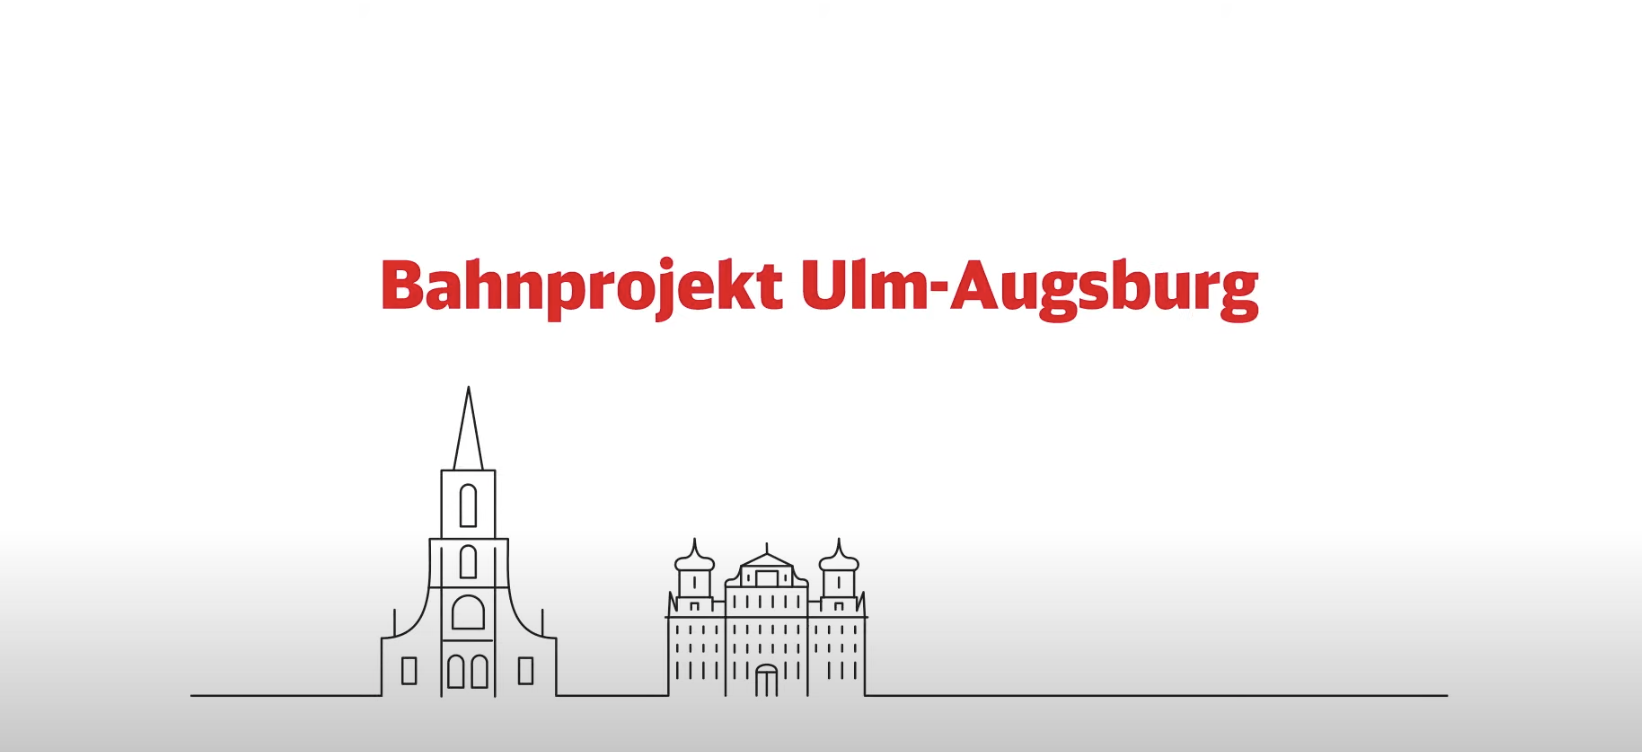 Bahnprojekt Ulm-Augsburg im Überblick